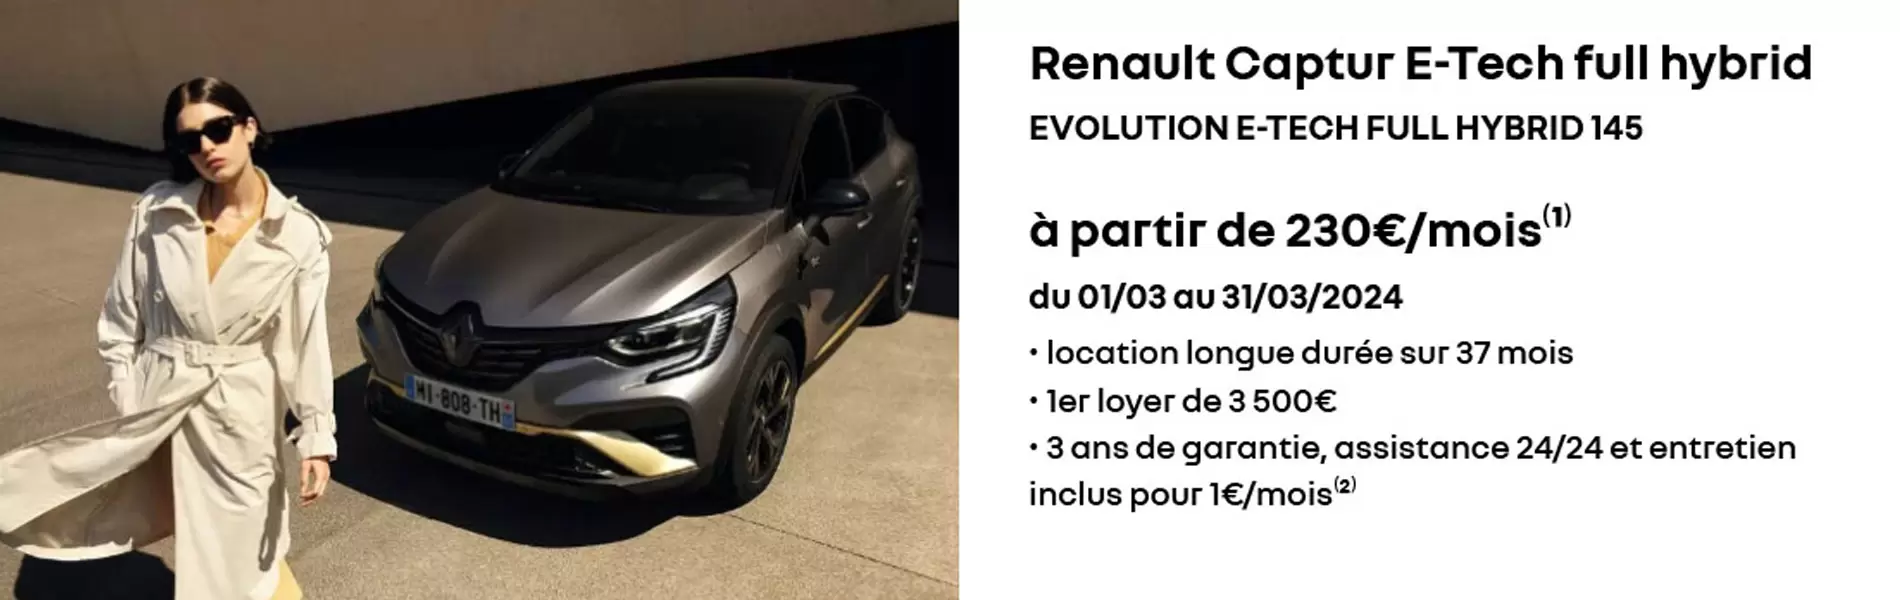 Renault capture e-tech